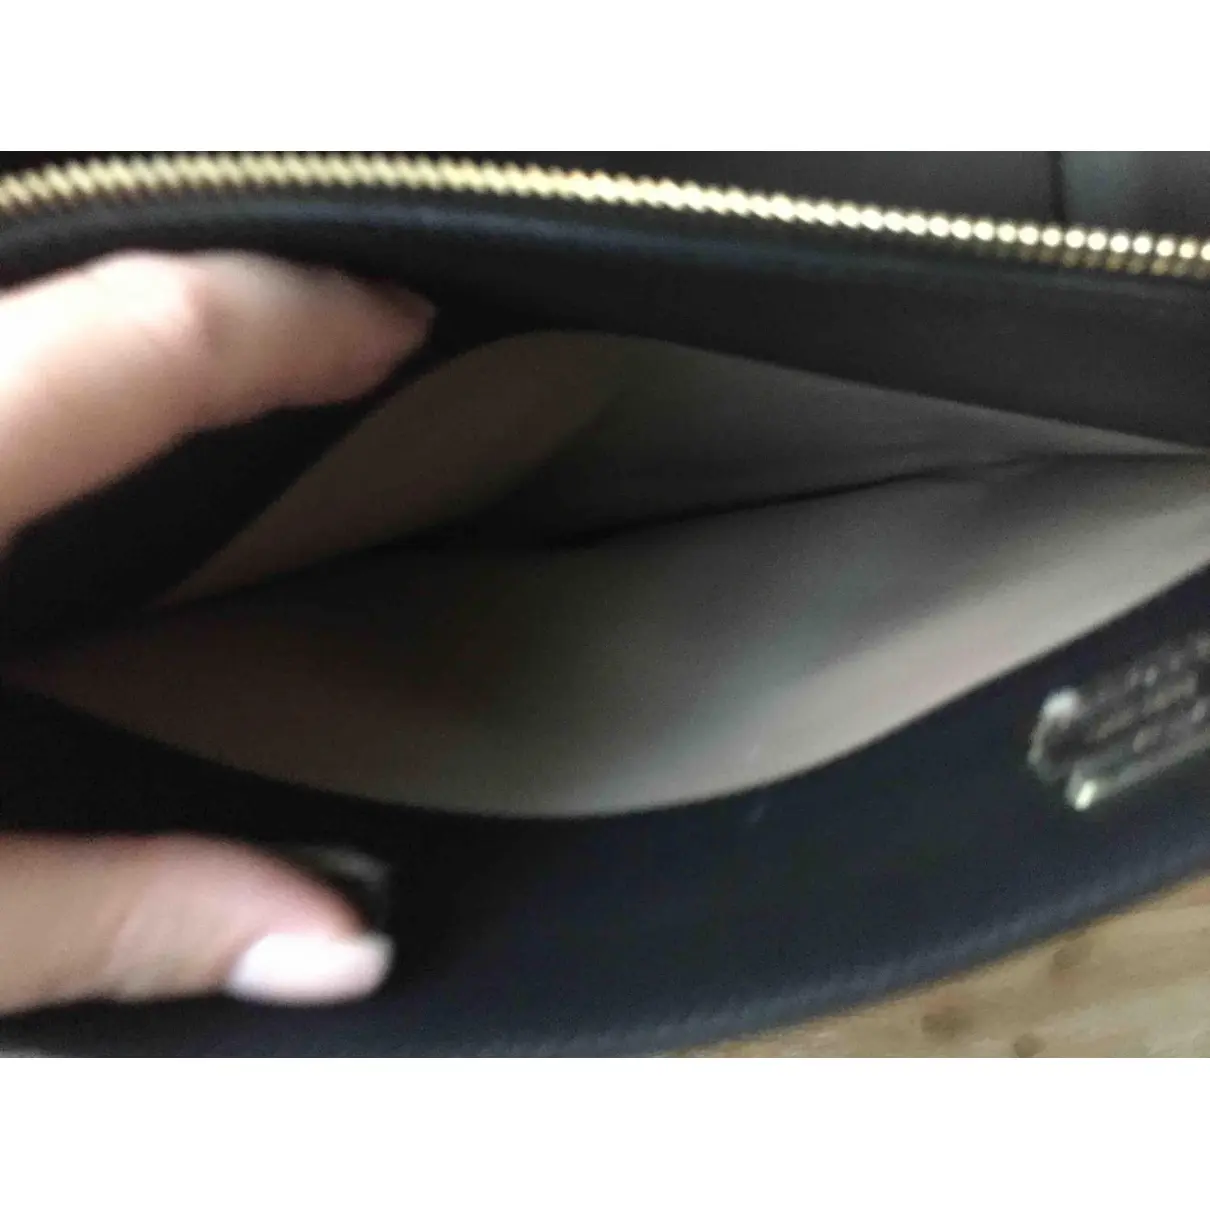 Leather handbag Giorgio Armani